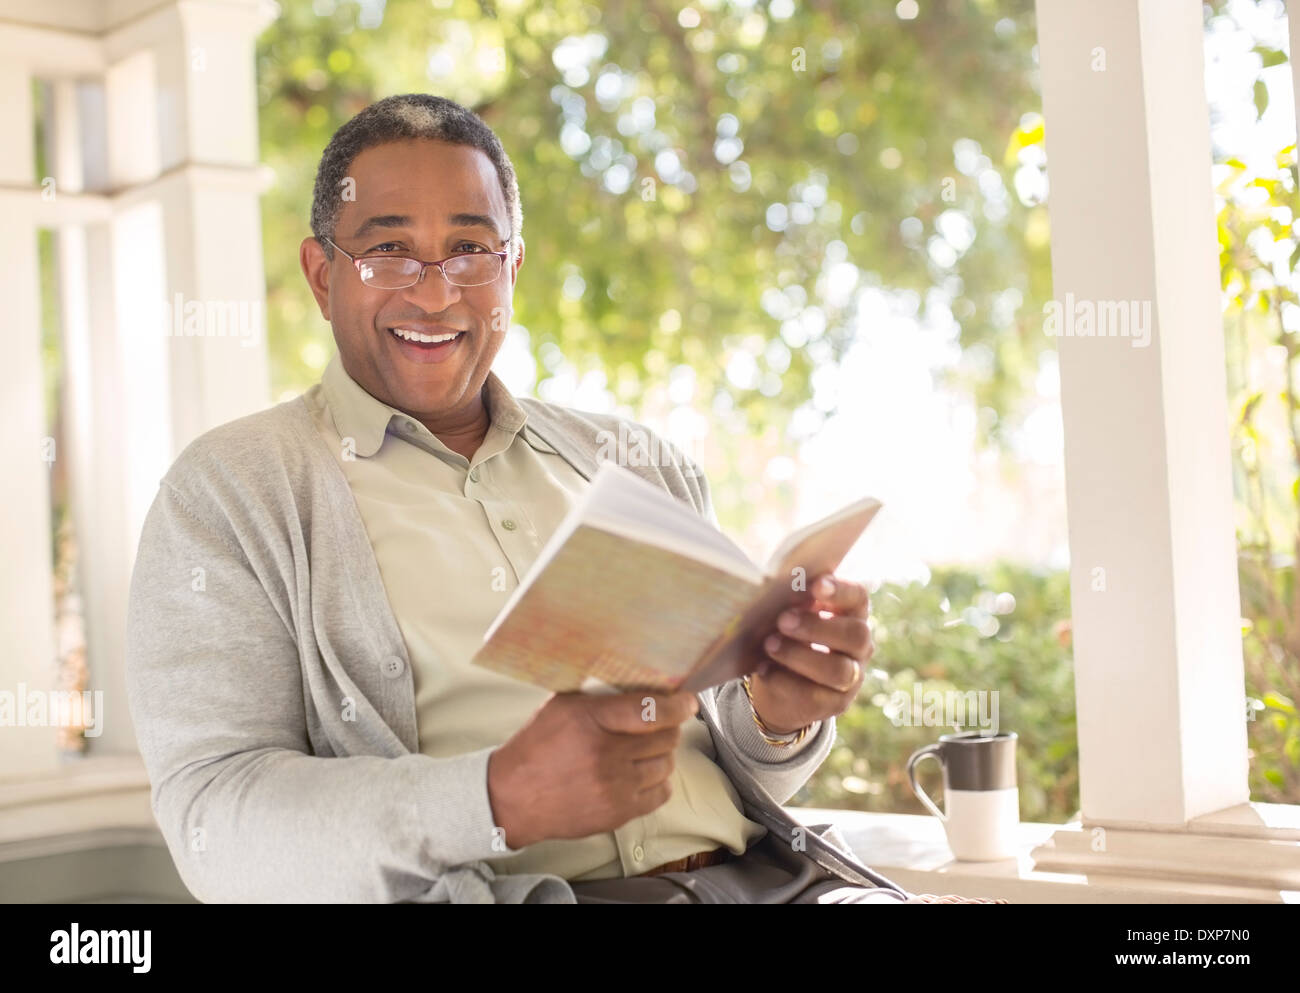 Portrait of smiling senior man reading book on porch Stock Photo